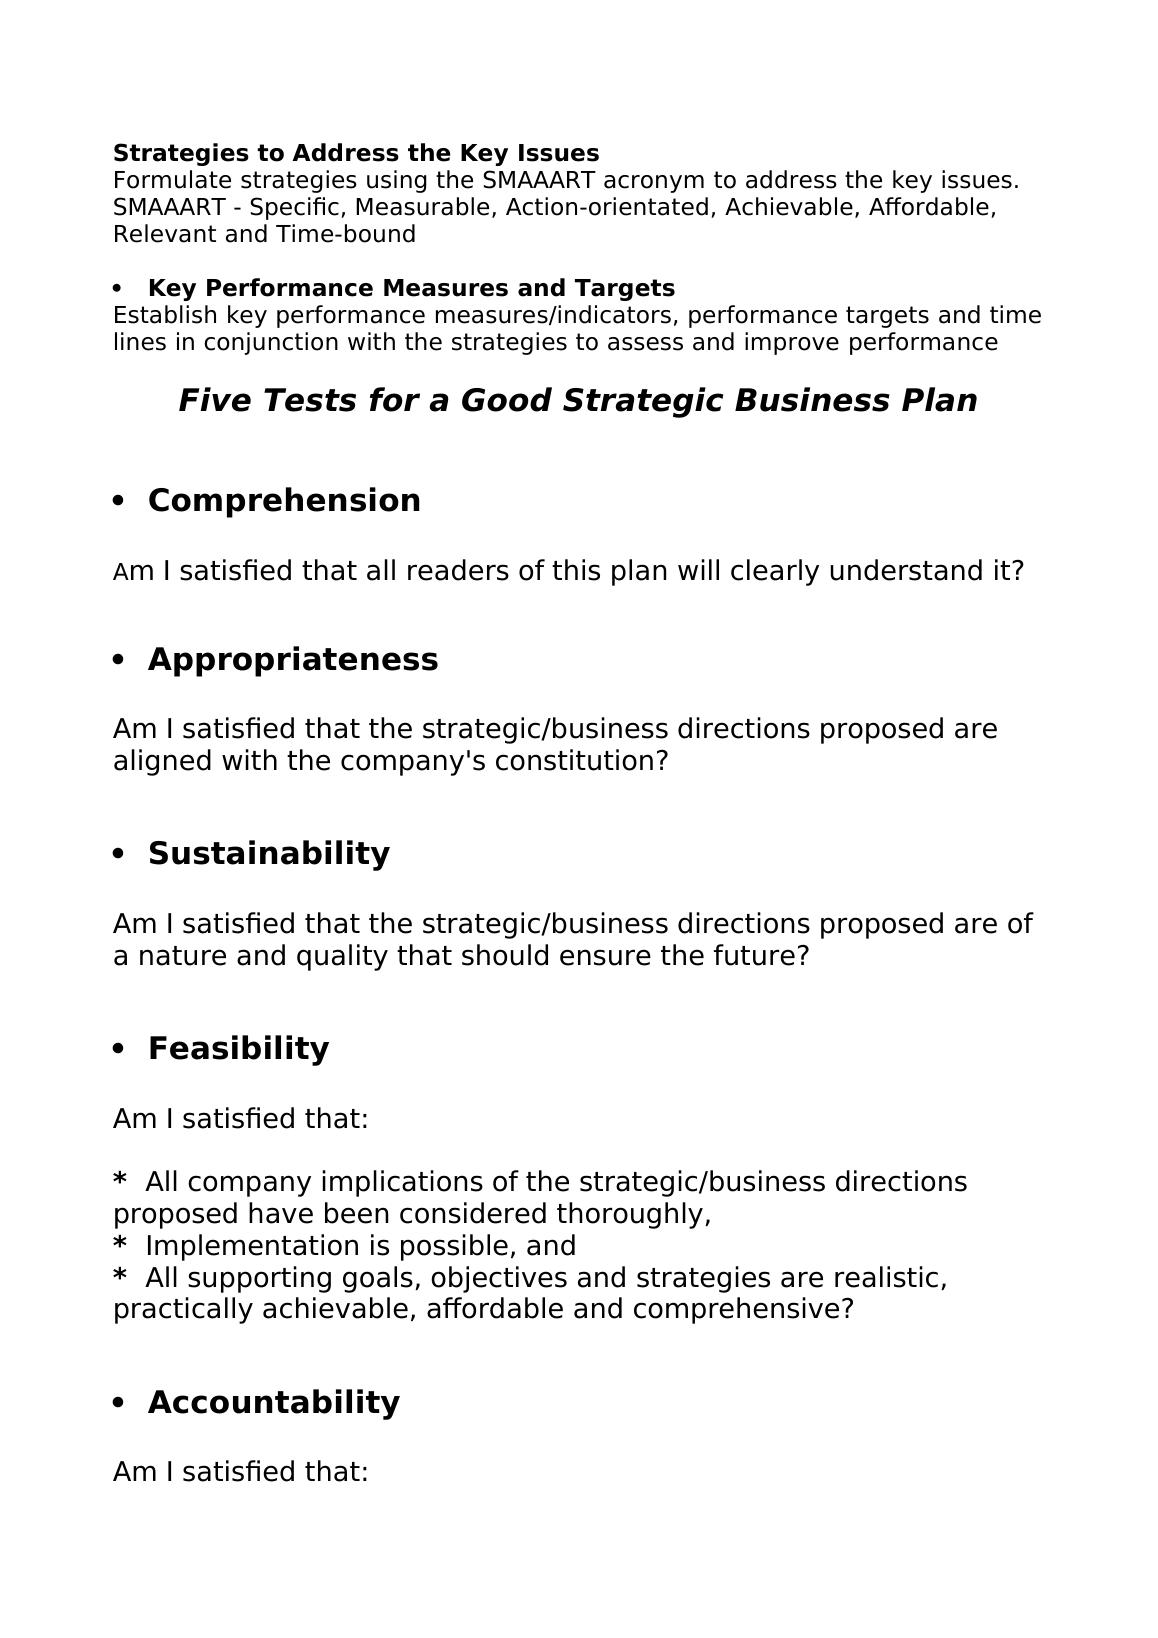 Assignment Strategic Business Plan_4